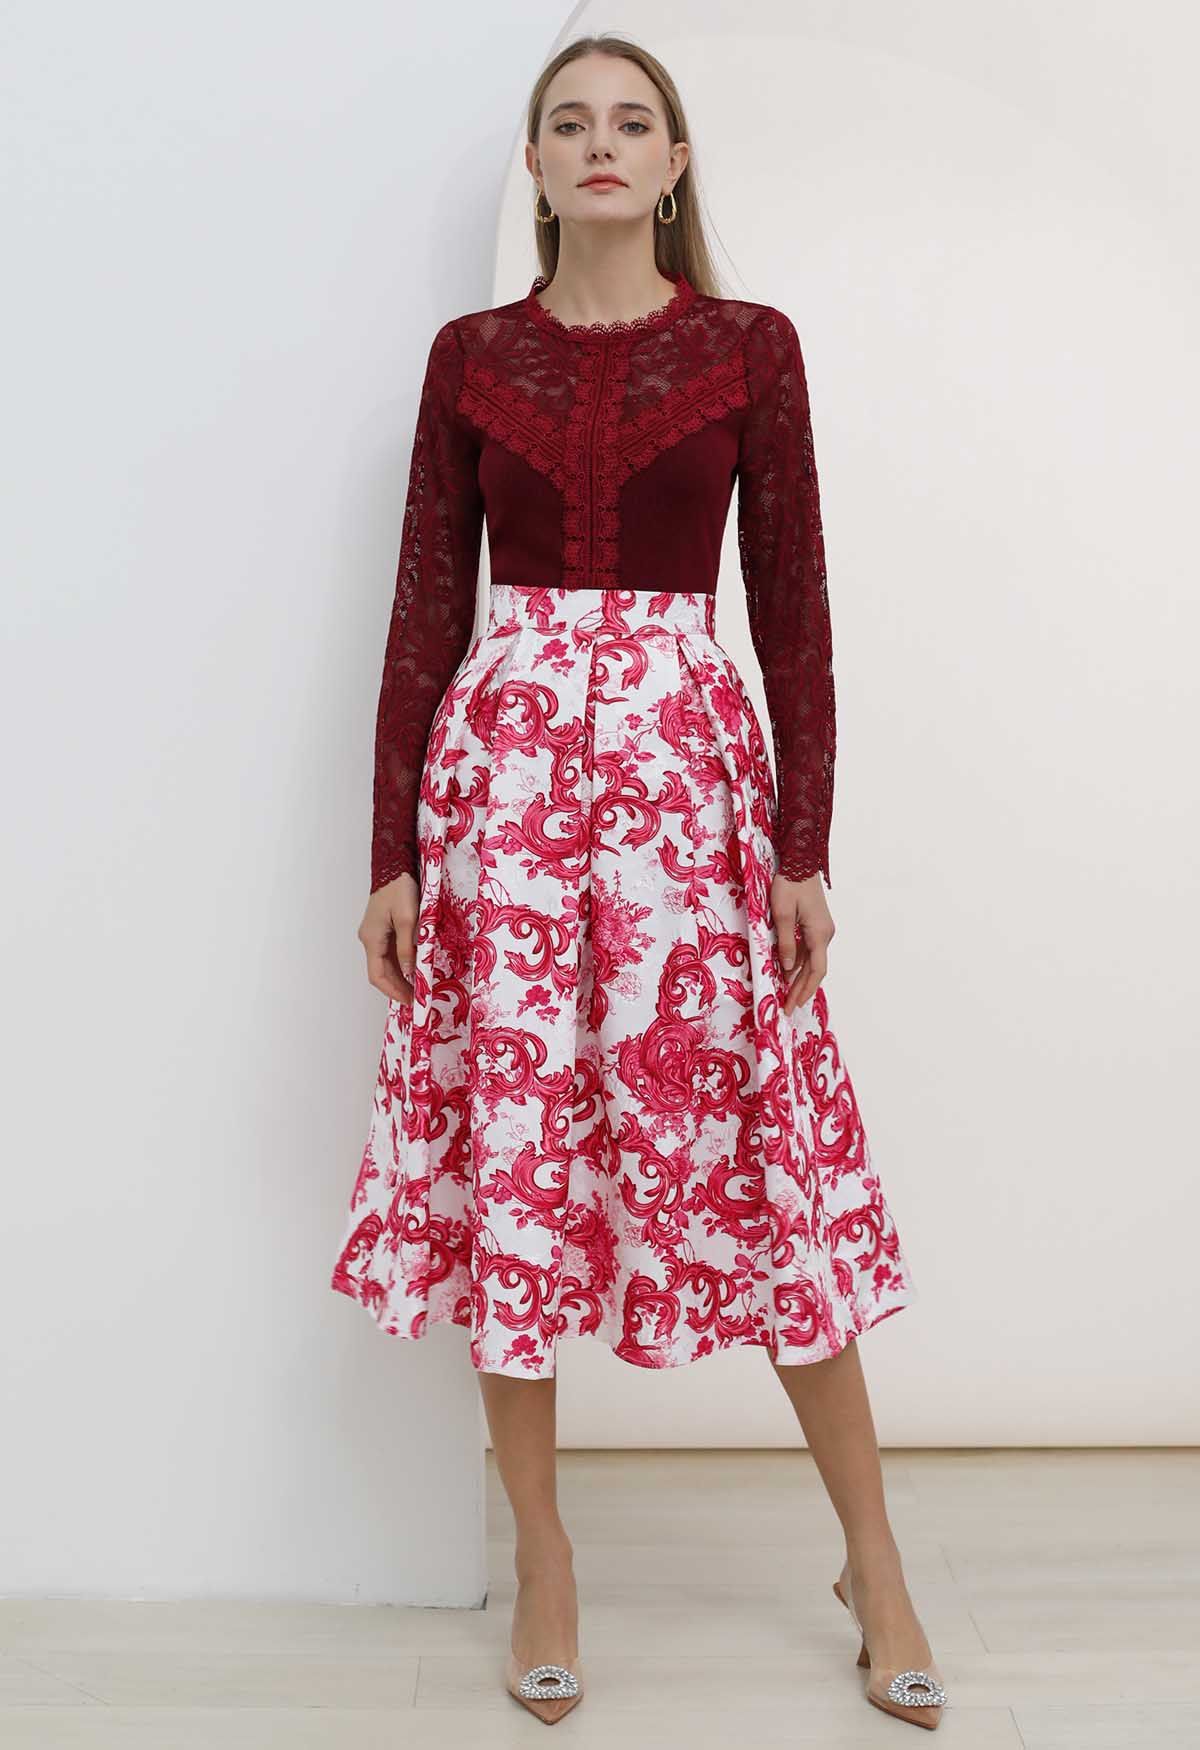 Vibrant Red Blossom Jacquard Pleated Midi Skirt